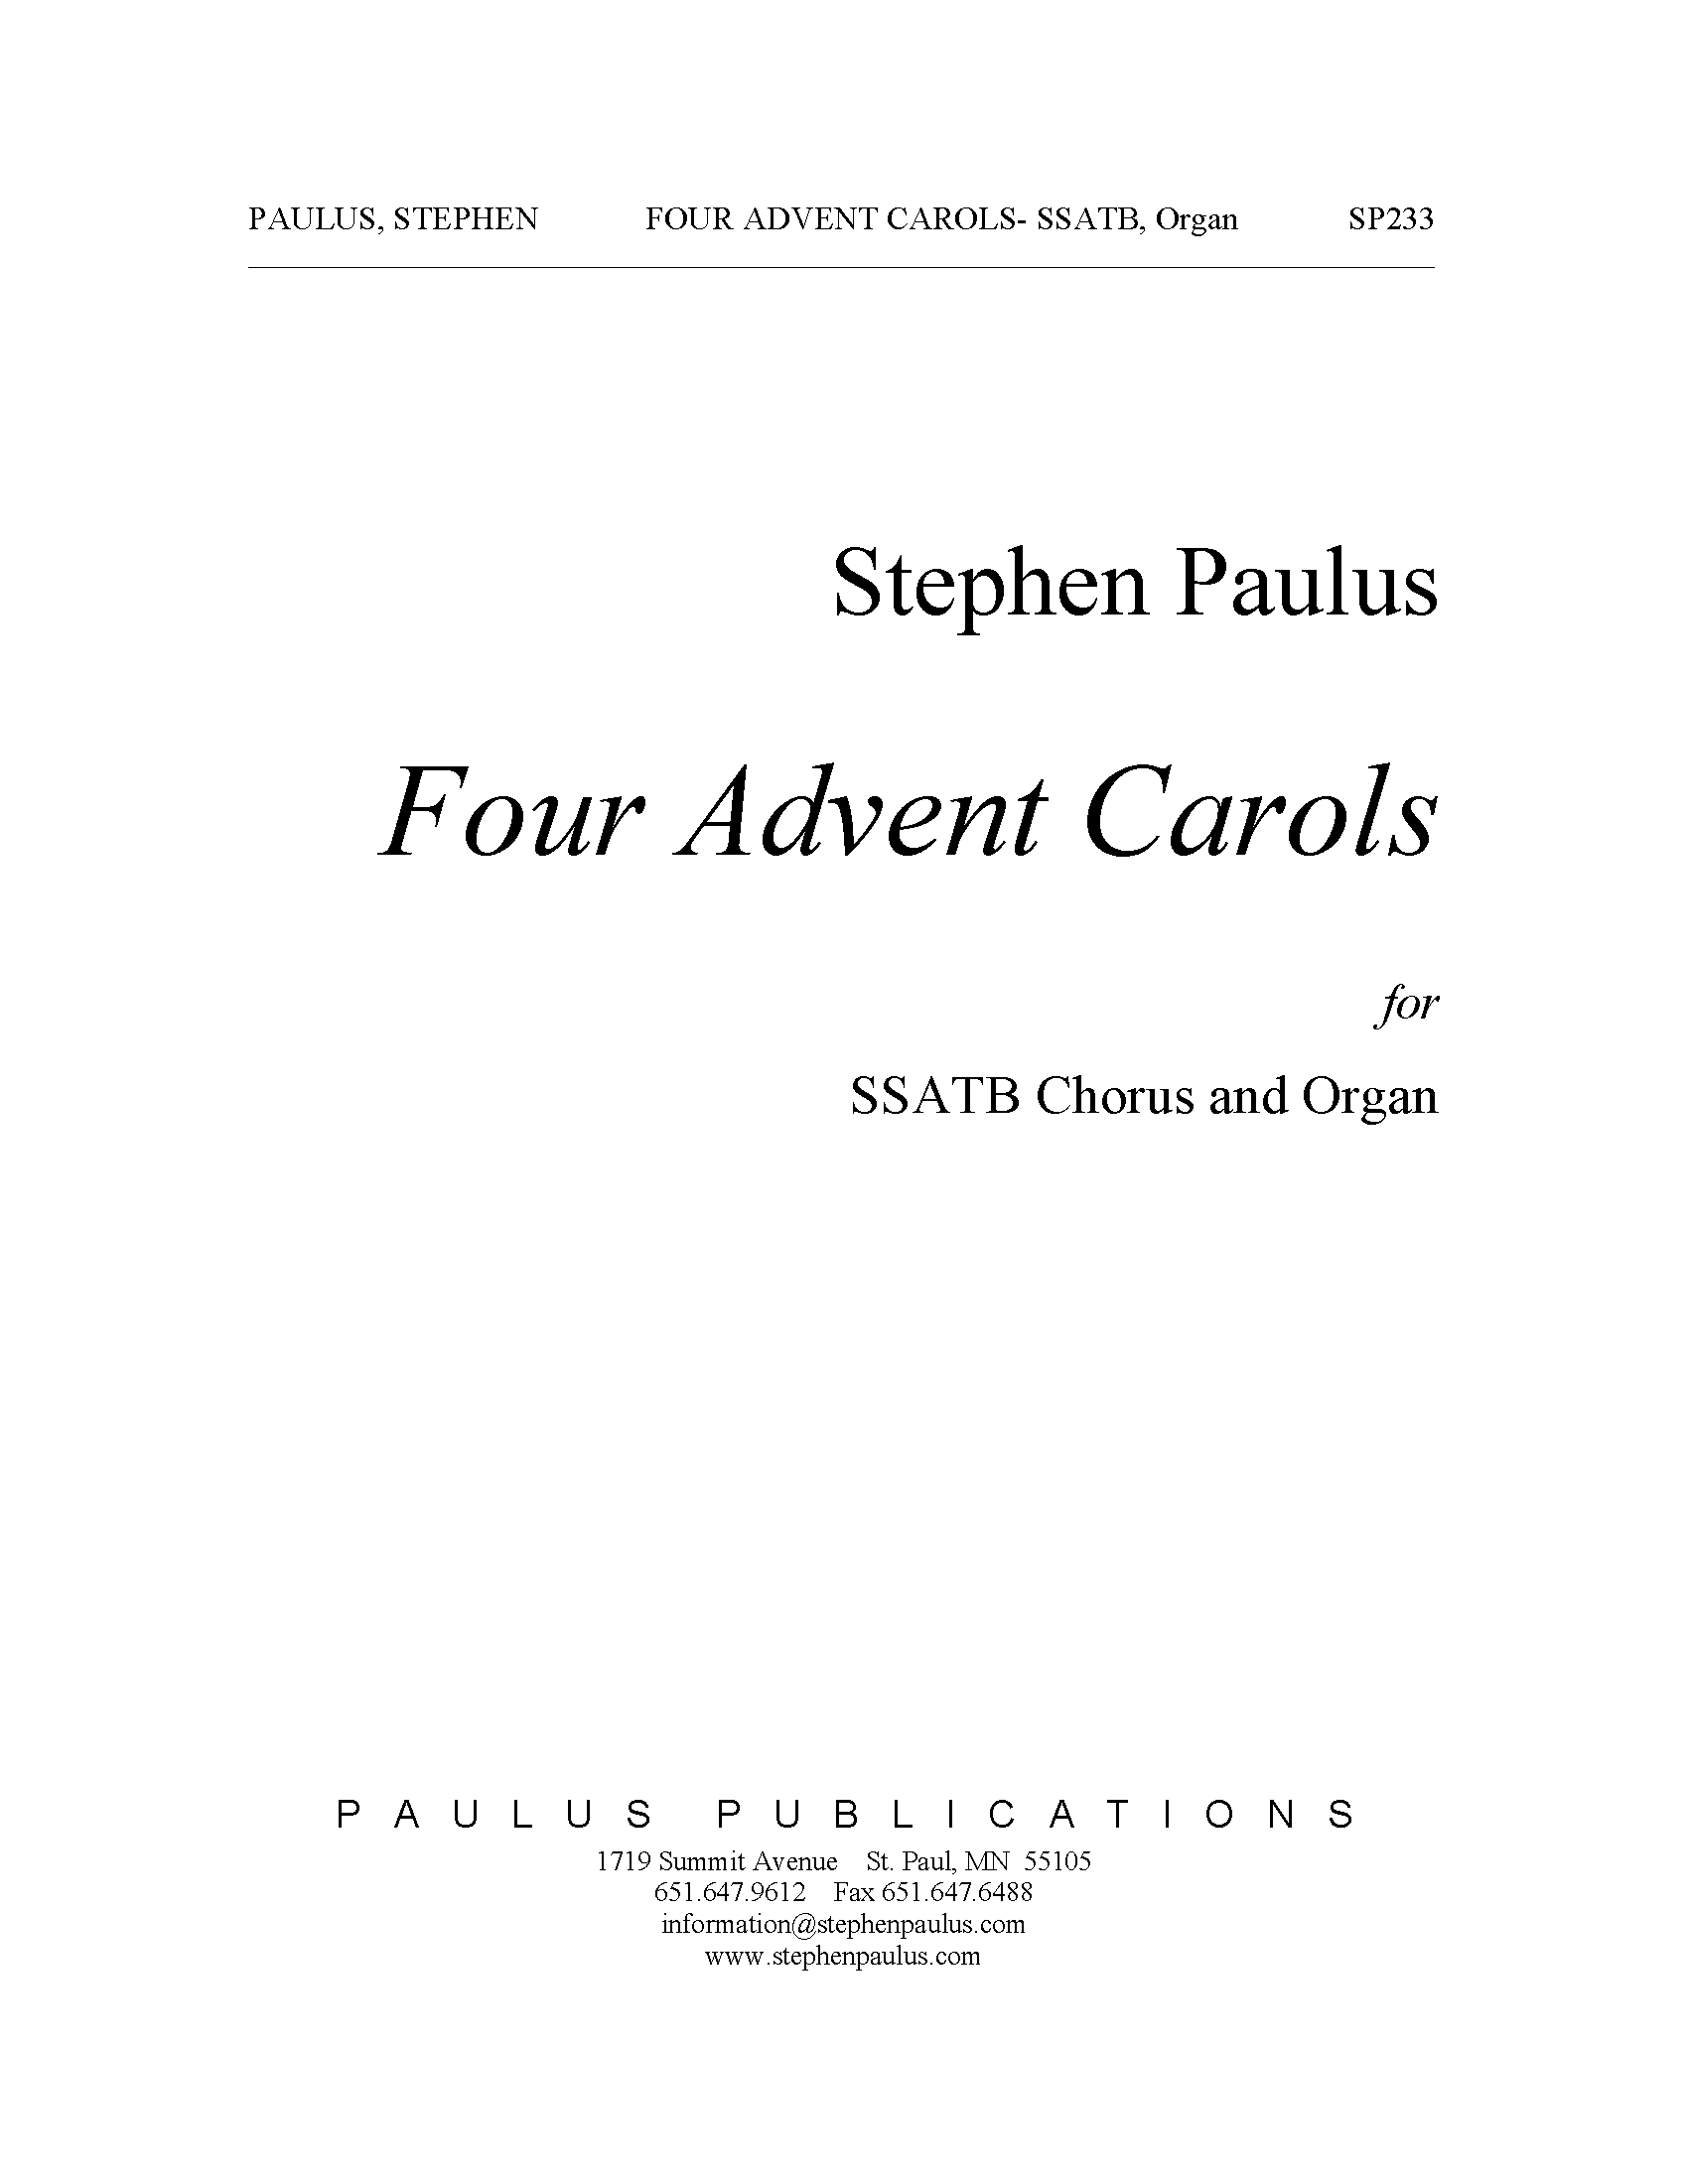 Four Advent Carols for SSATB & Organ